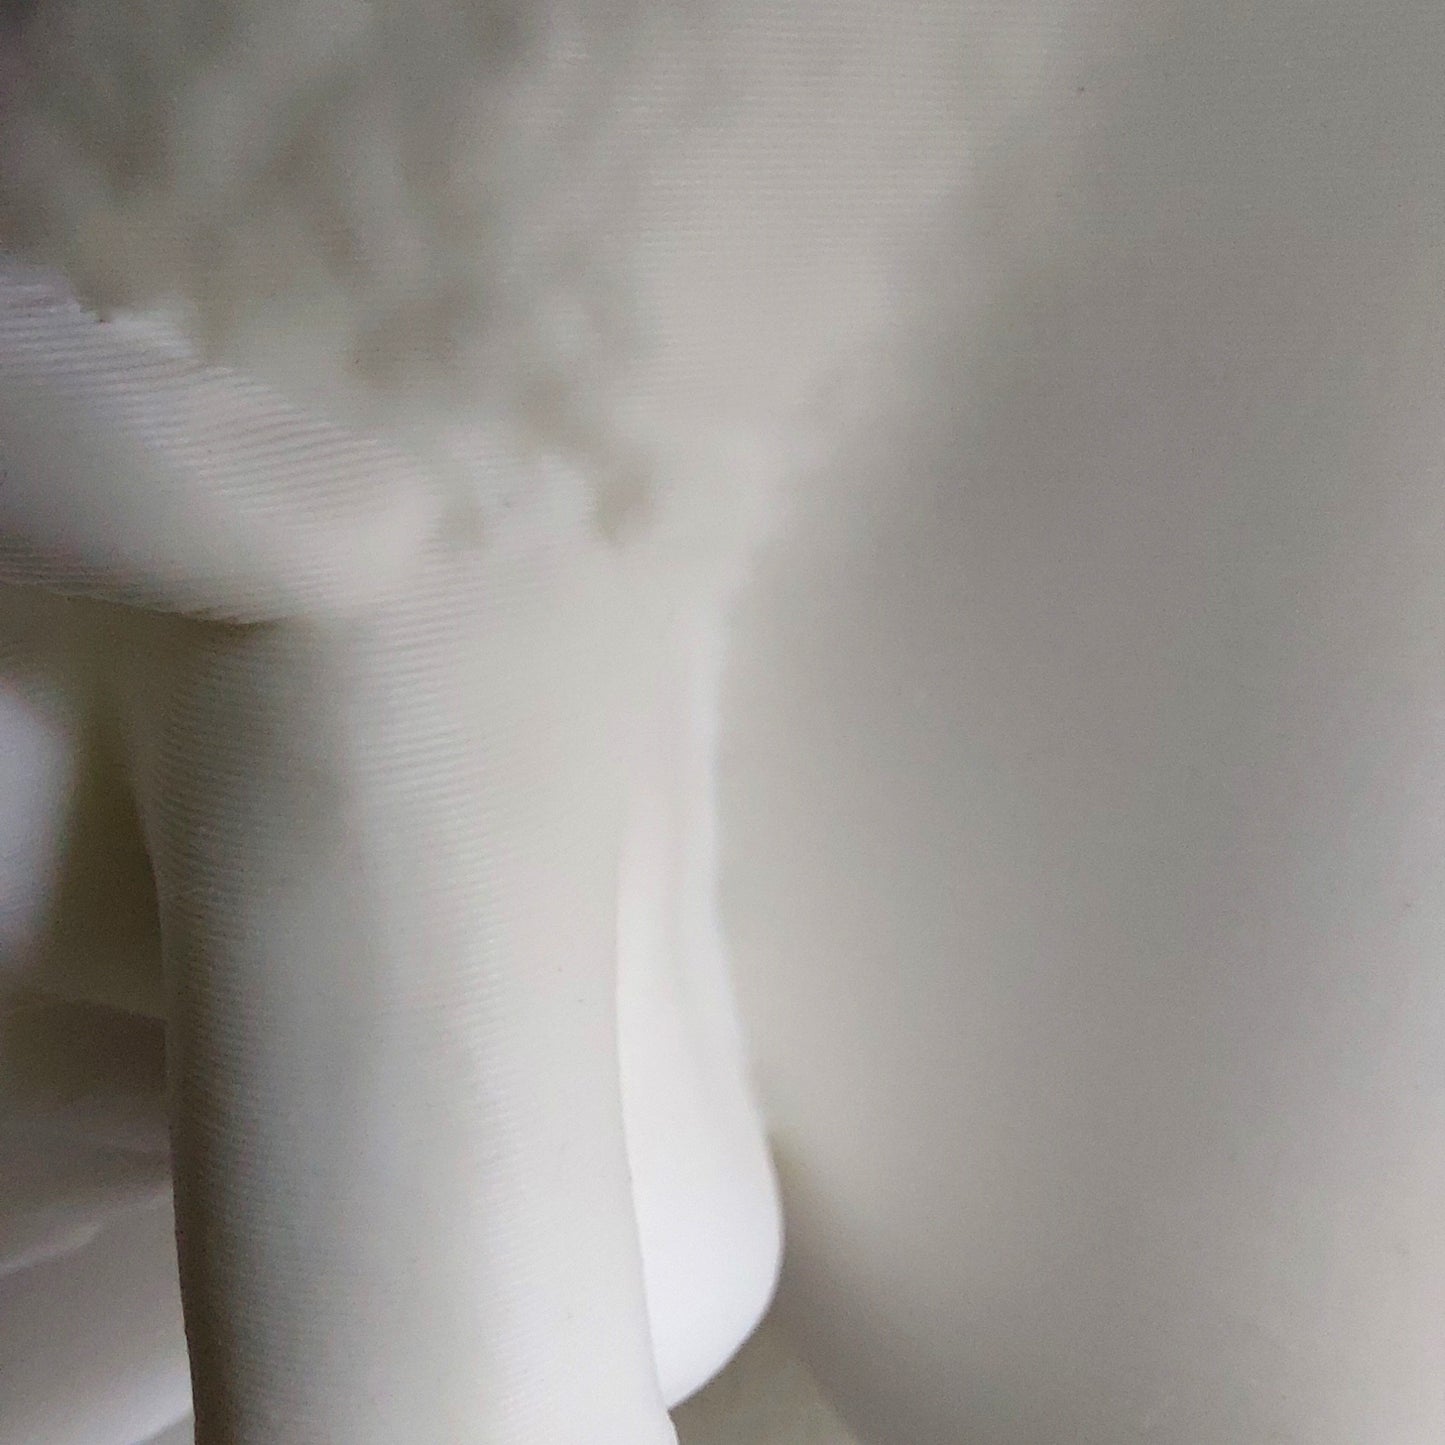 Mr Confident - 3D Printed Male Nude Planter Pot